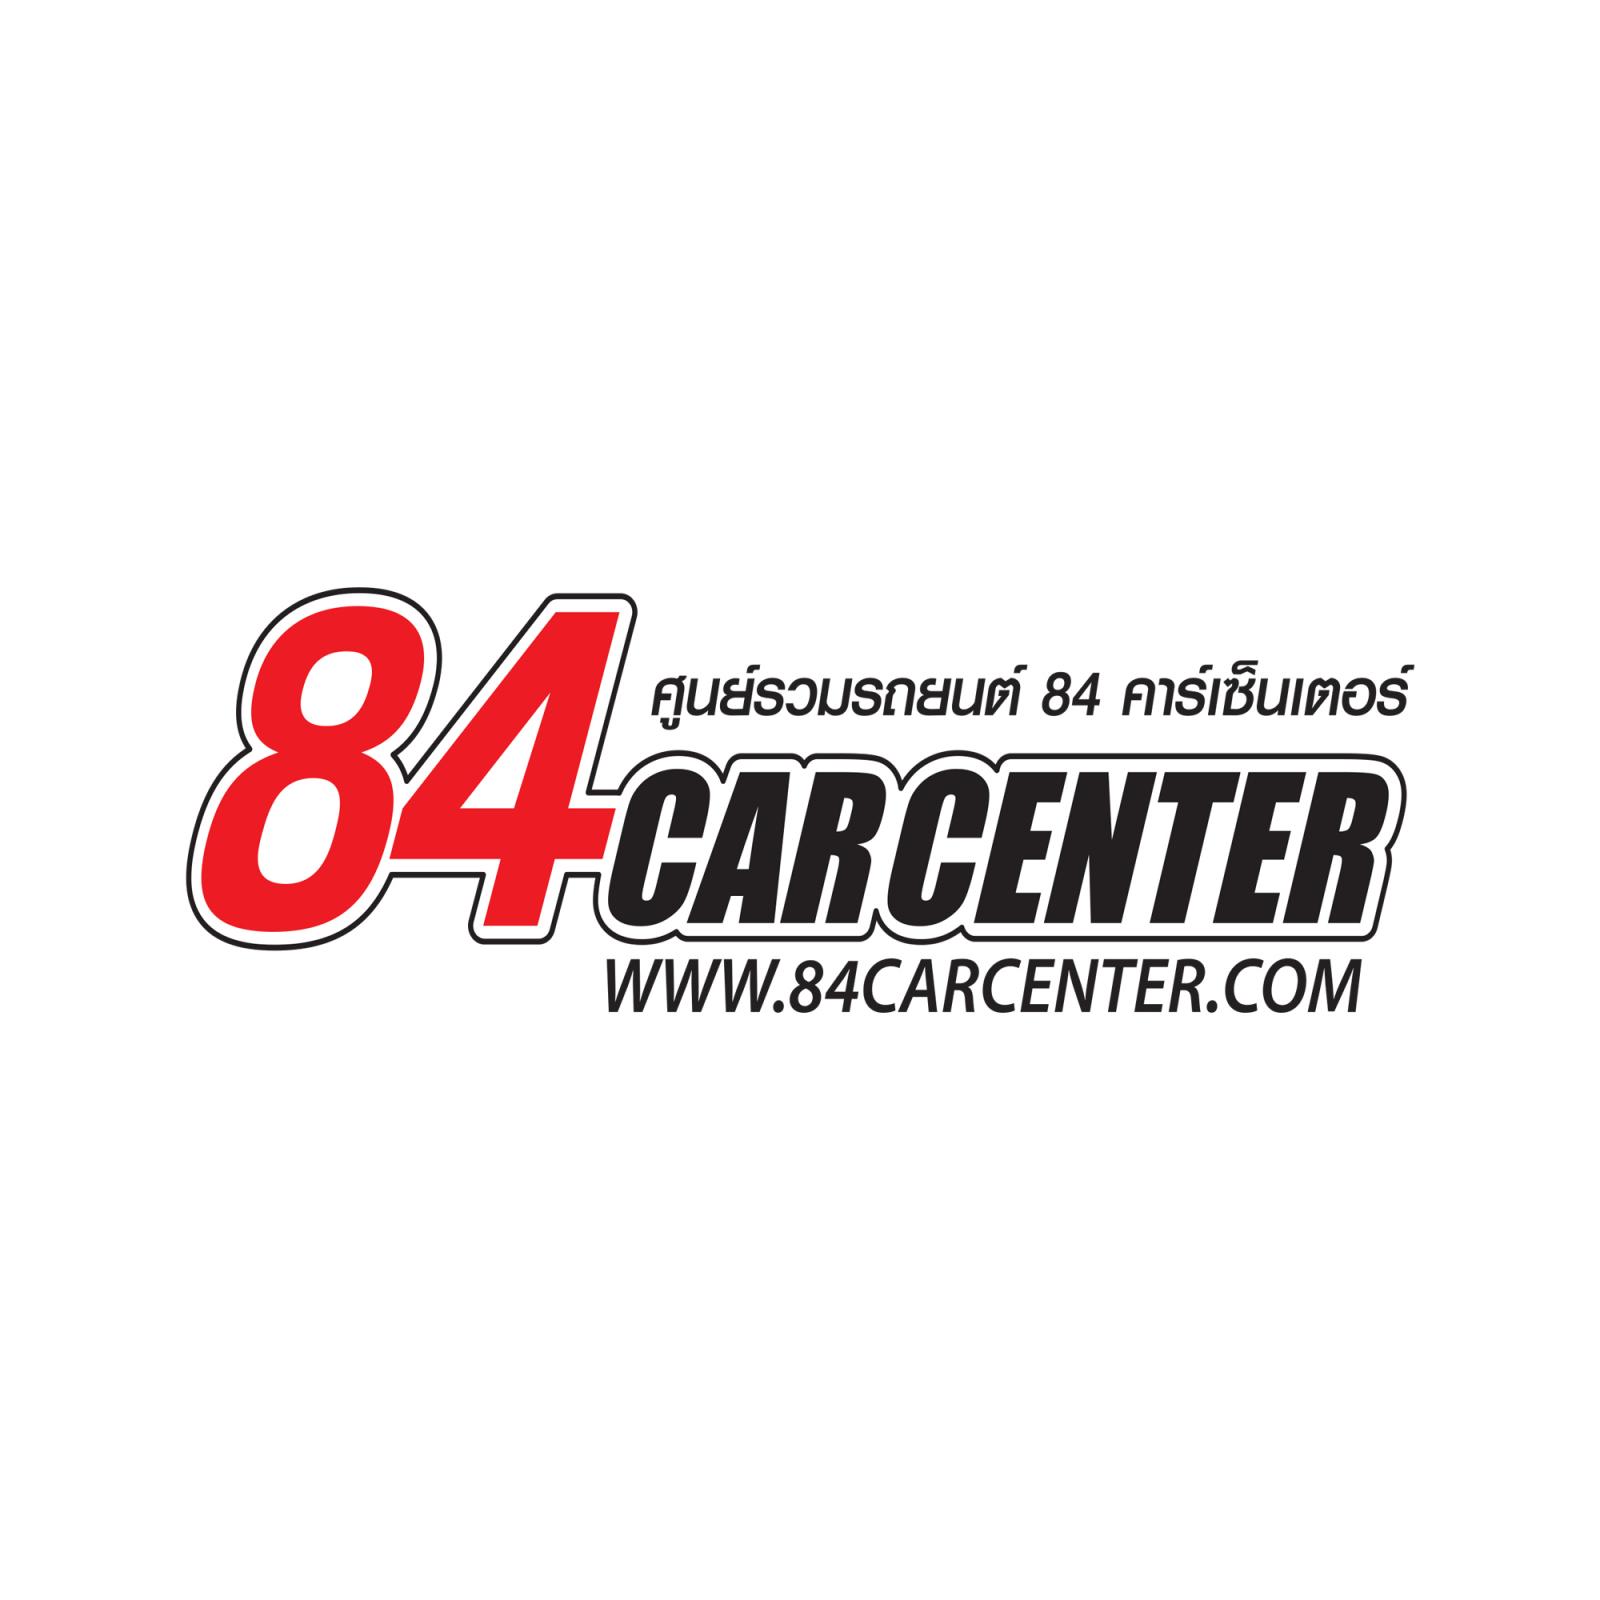 84 Carcenter